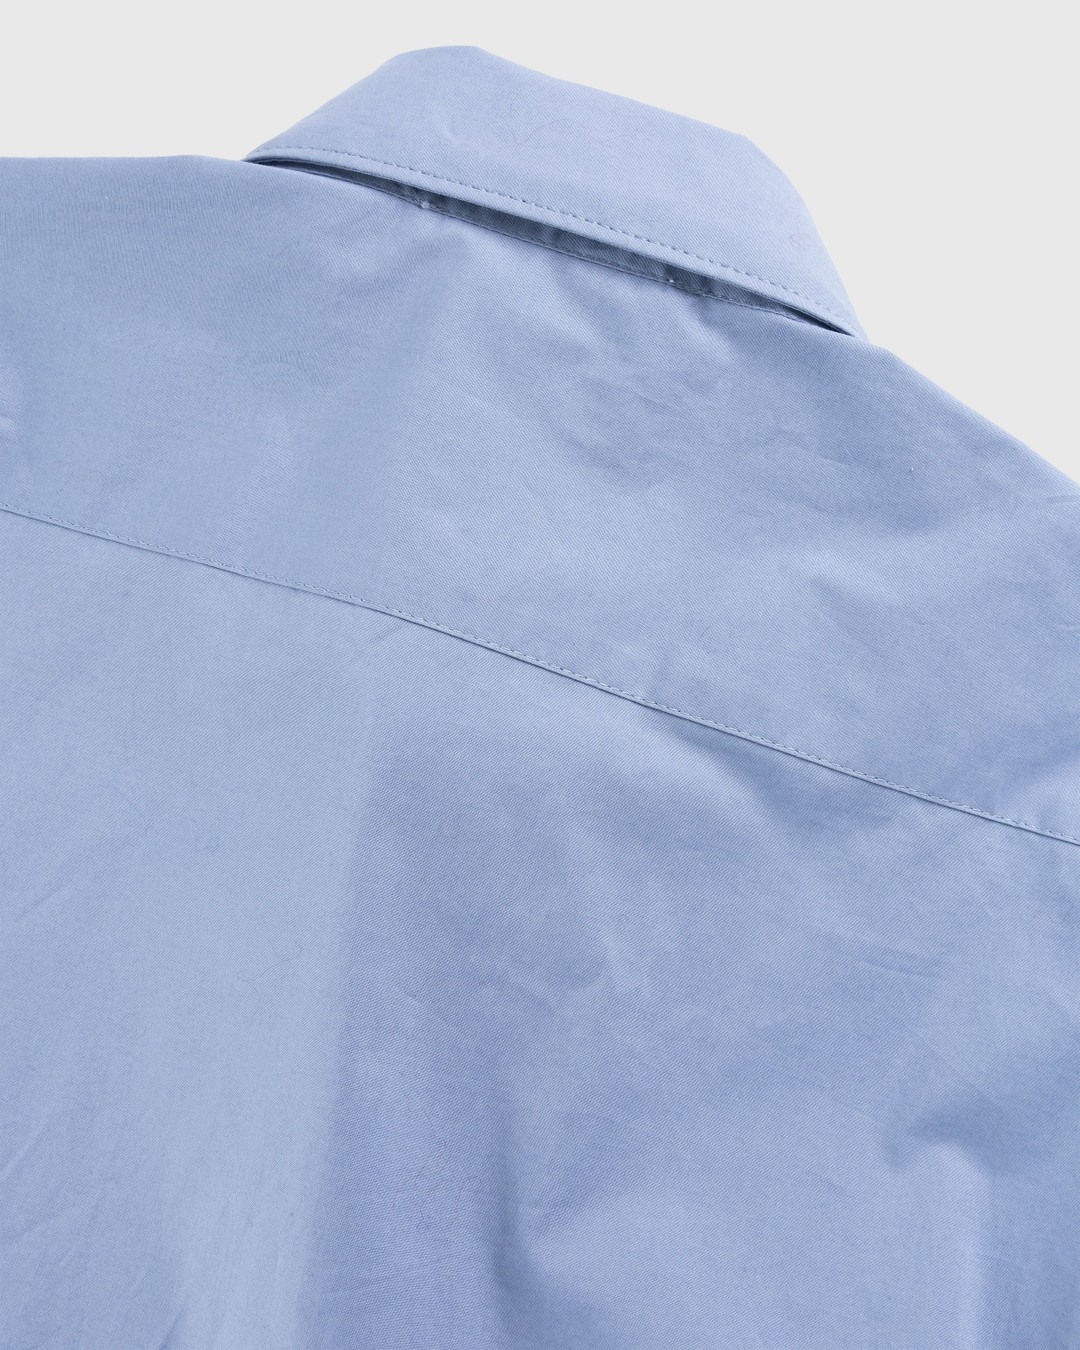 Acne Studios – Short-Sleeve Button-Up Dusty Blue - Shirts - Blue - Image 6